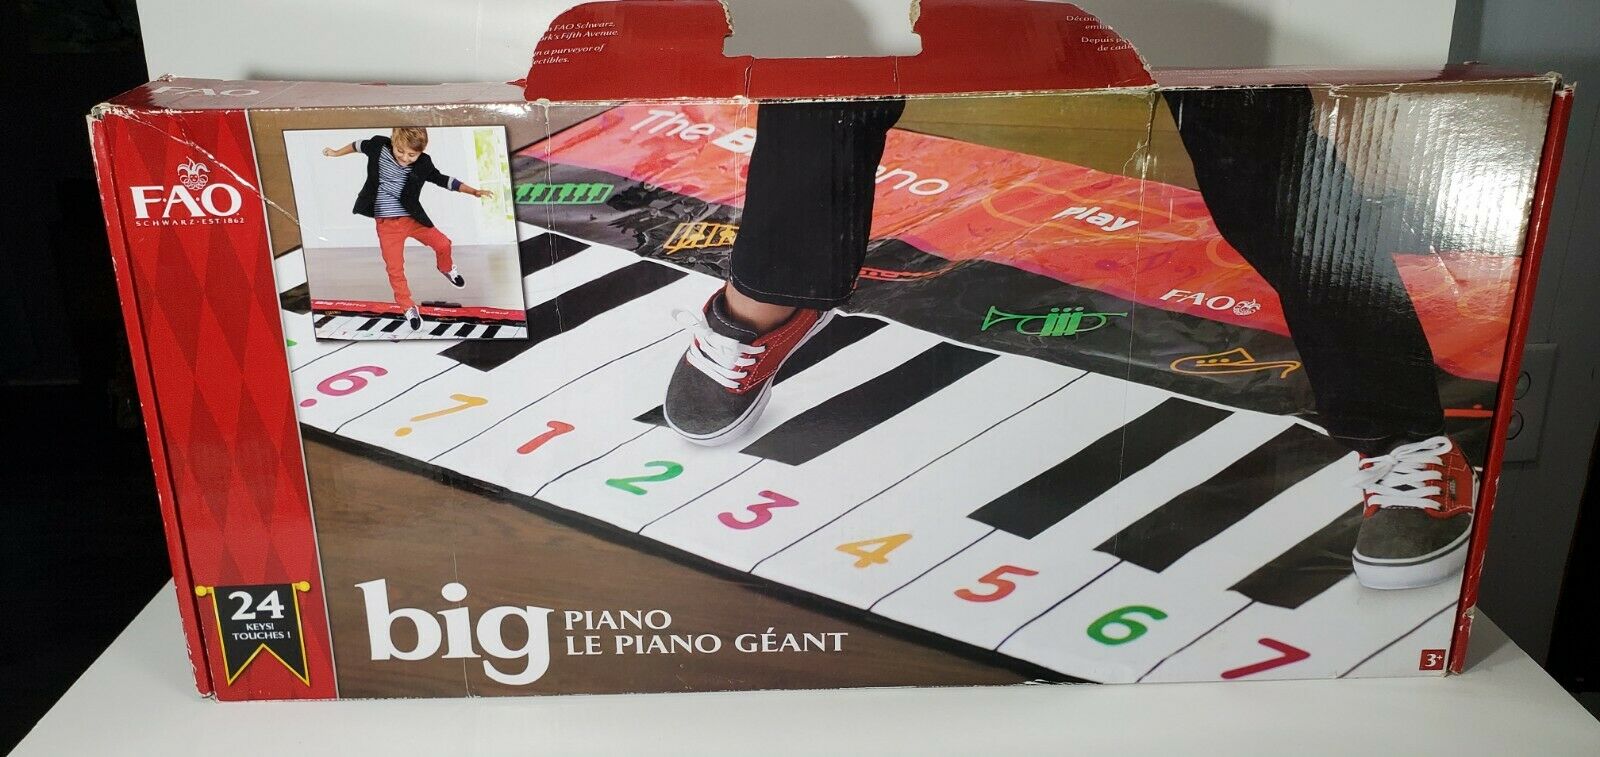 Fao Schwartz The Big Piano 70” Long Musical Playmat Giant Dance Floor Foot